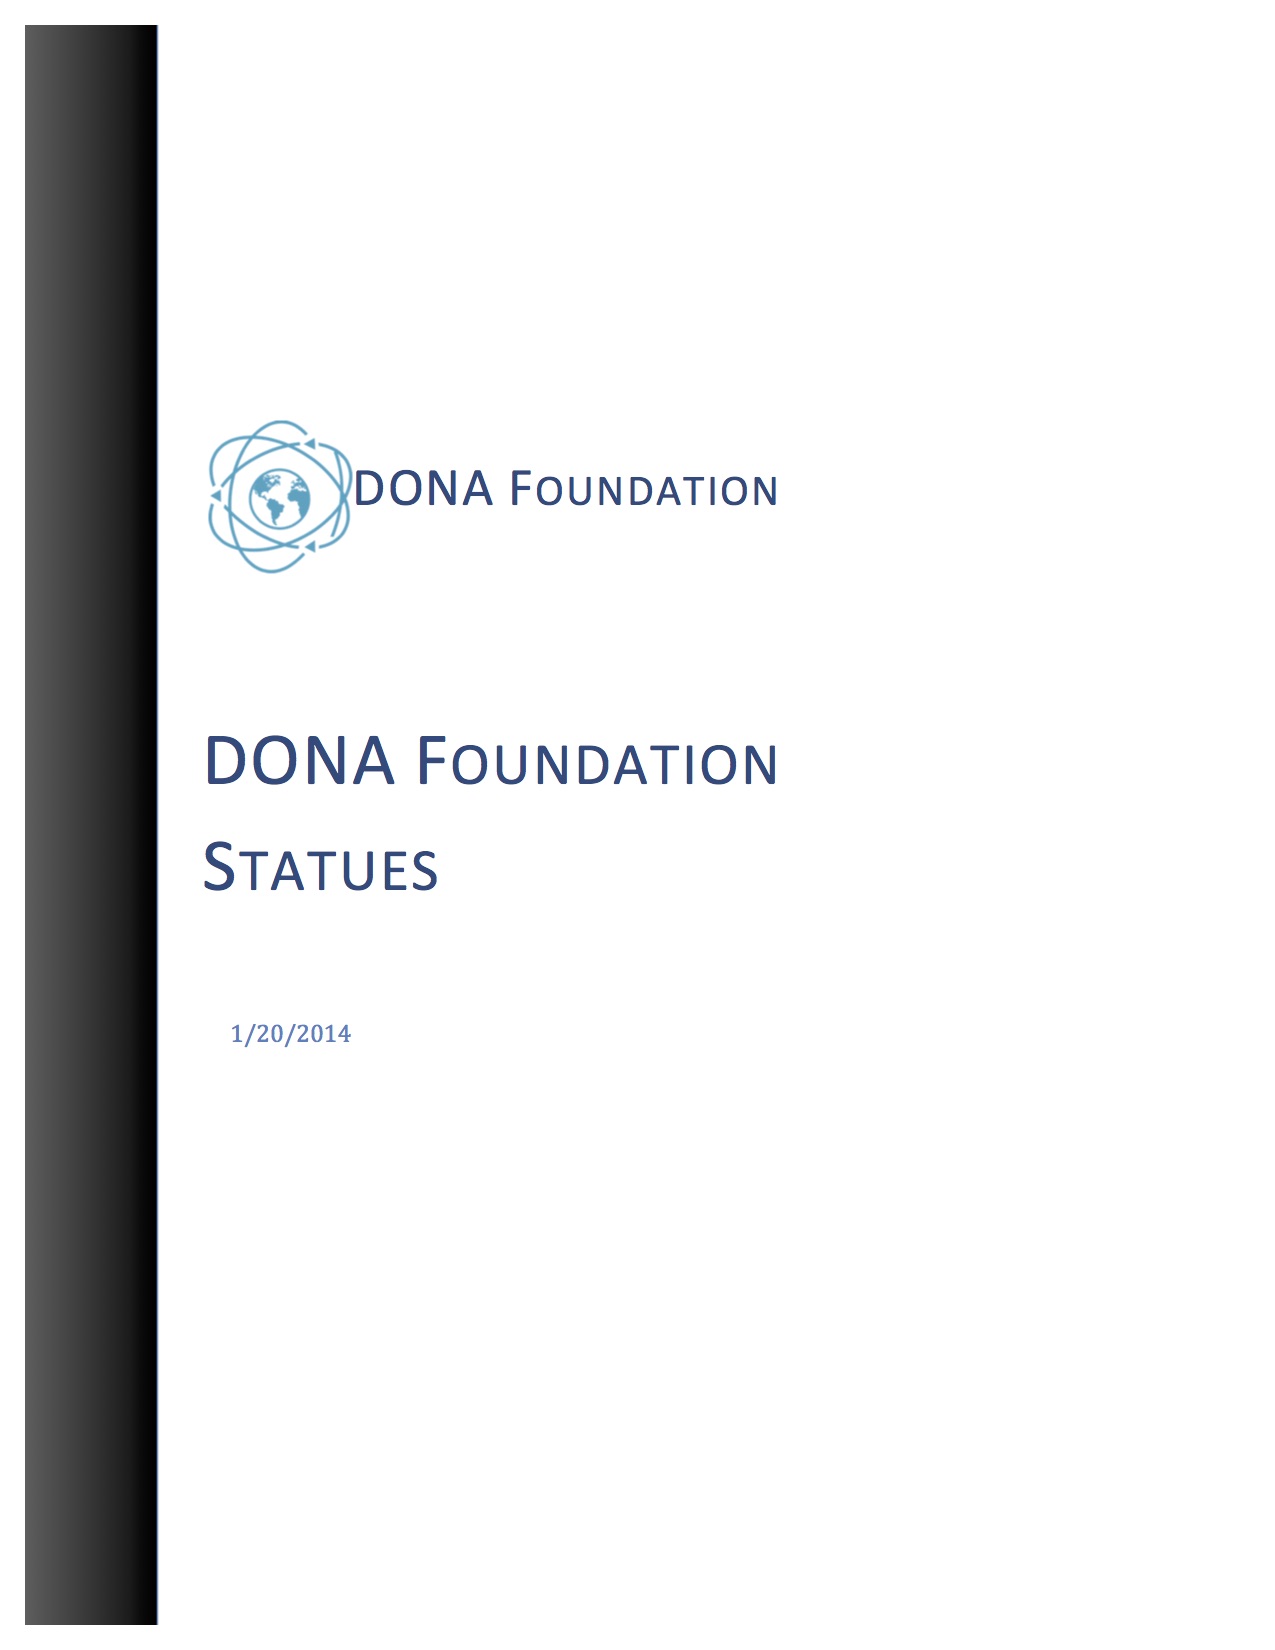 The DONA Foundation Statutes